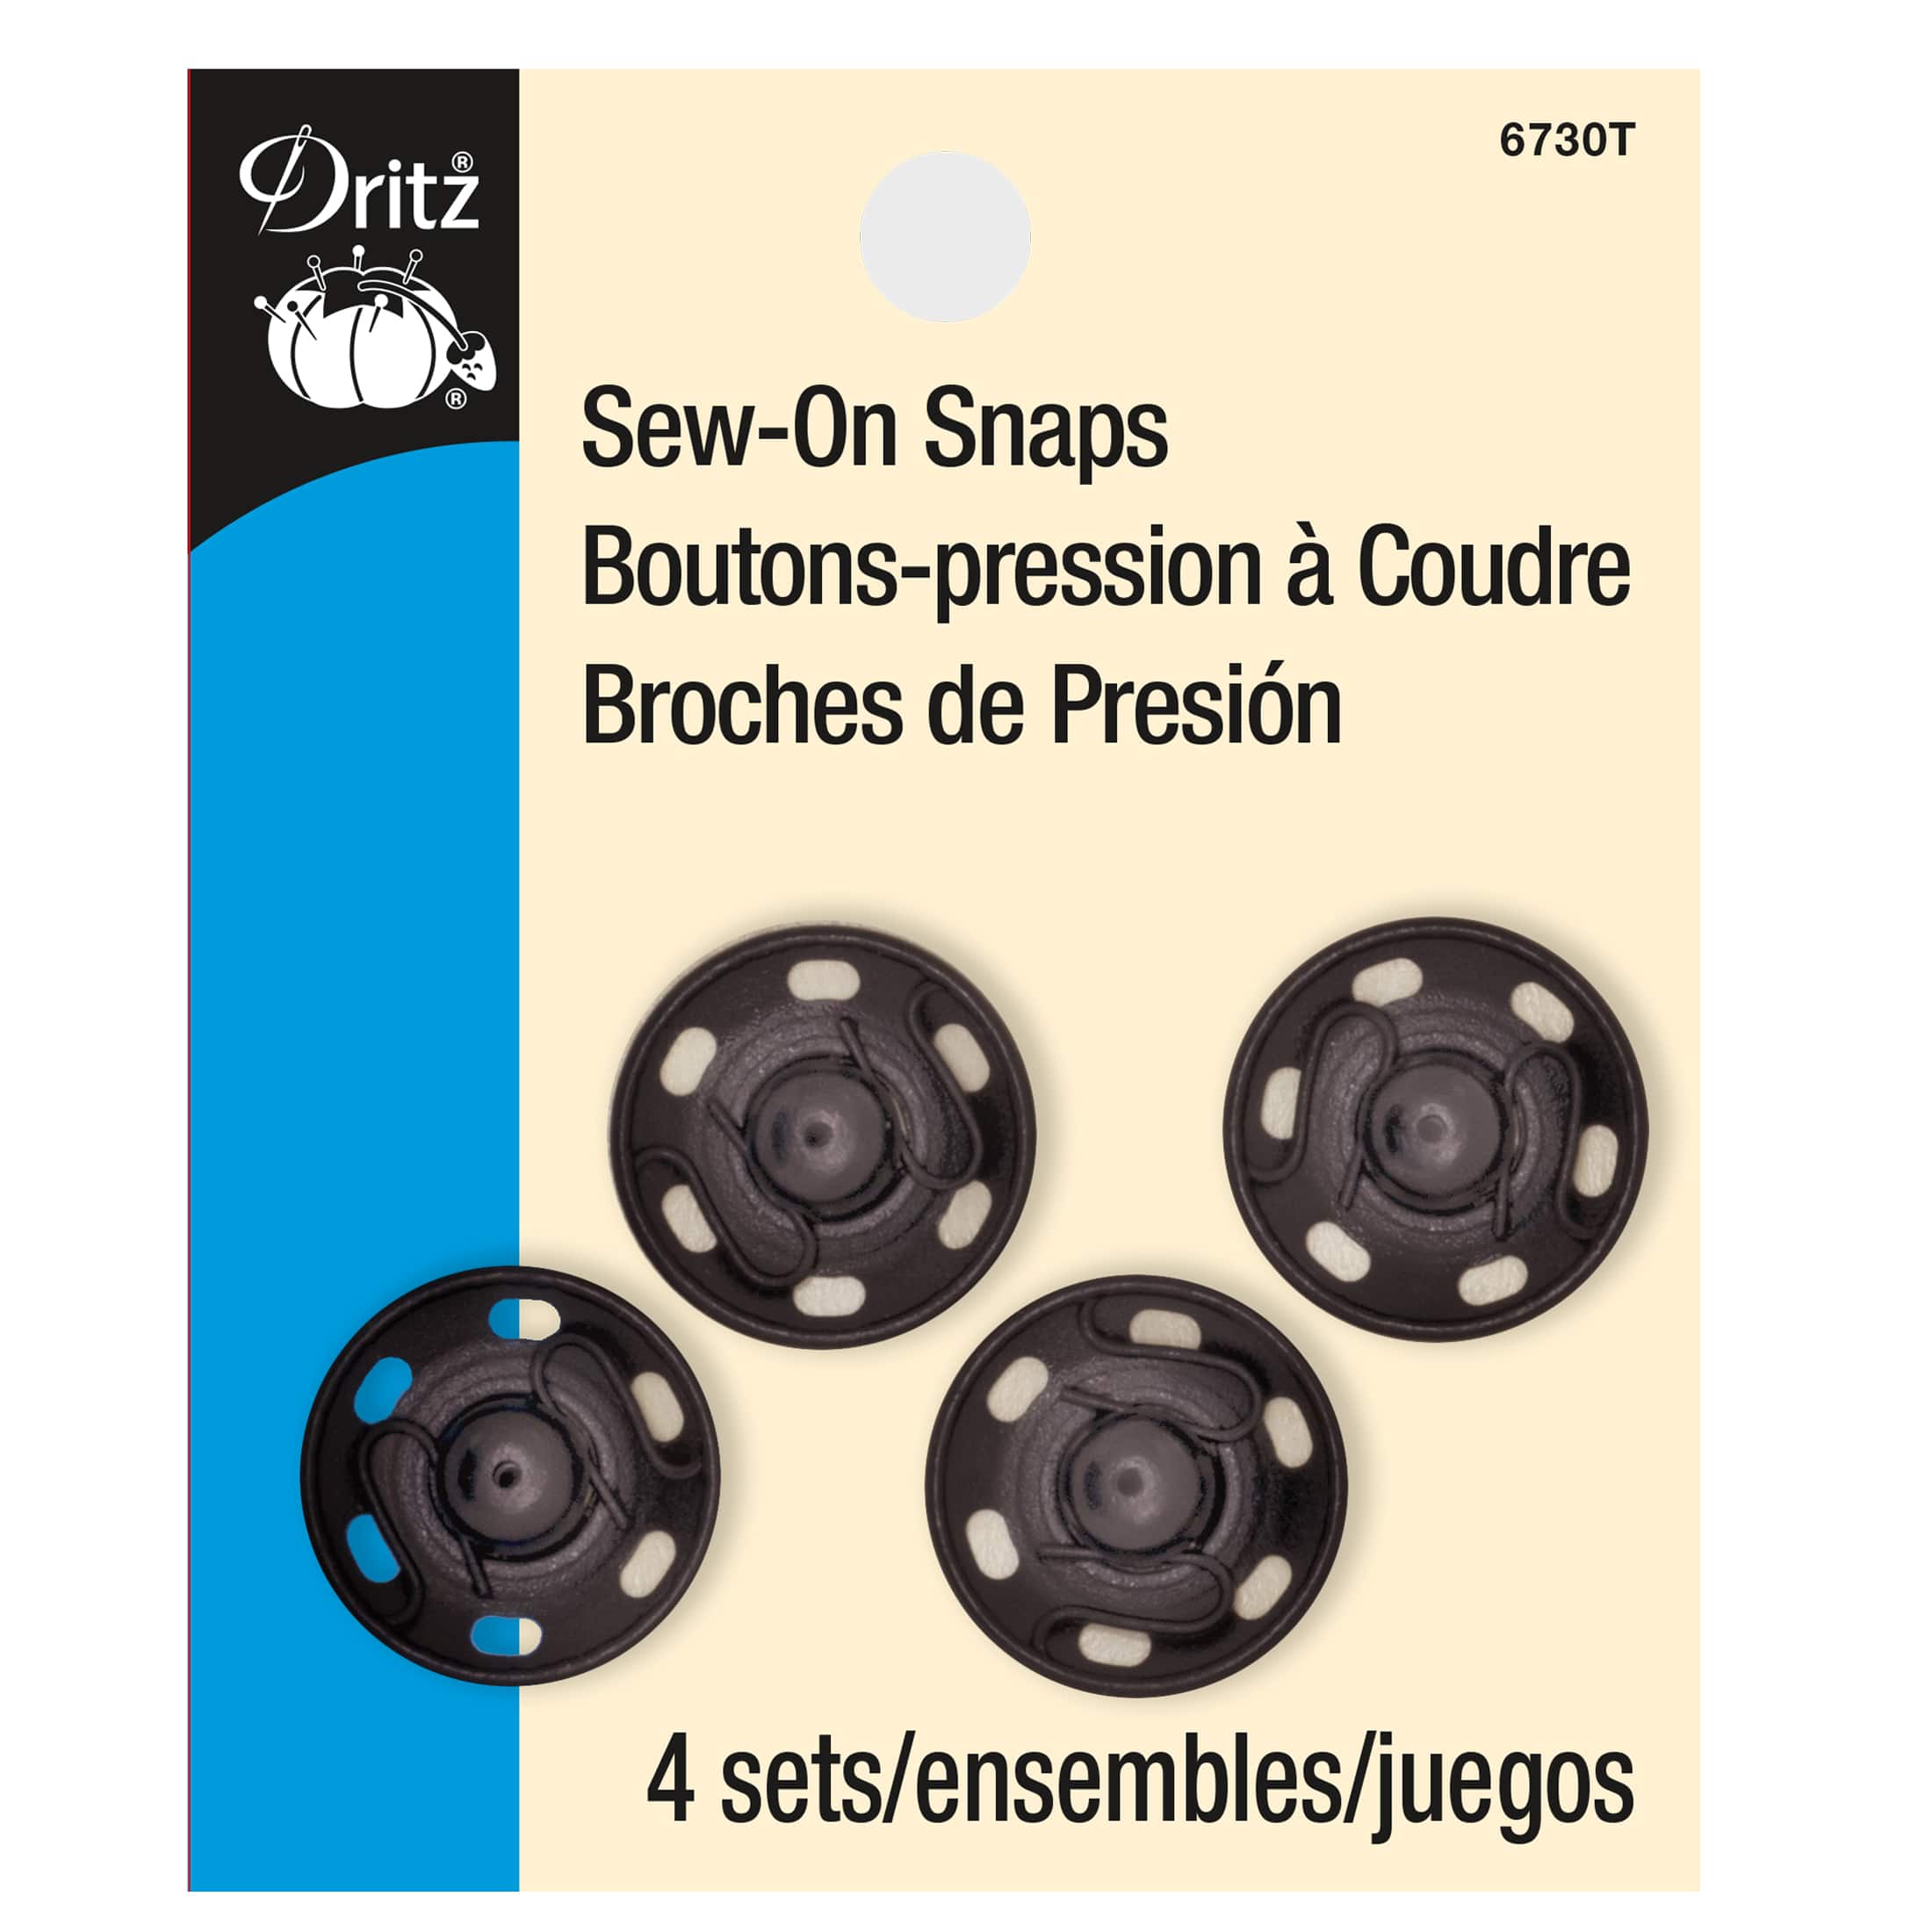 Dritz 10 Sew-On Snaps Black Size 2/0